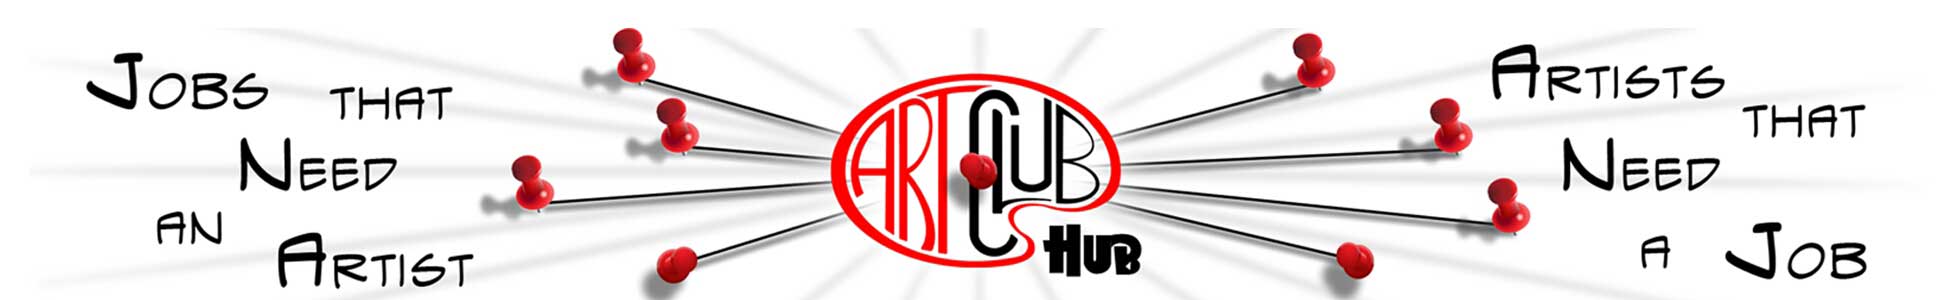 ART Club Hub Banner